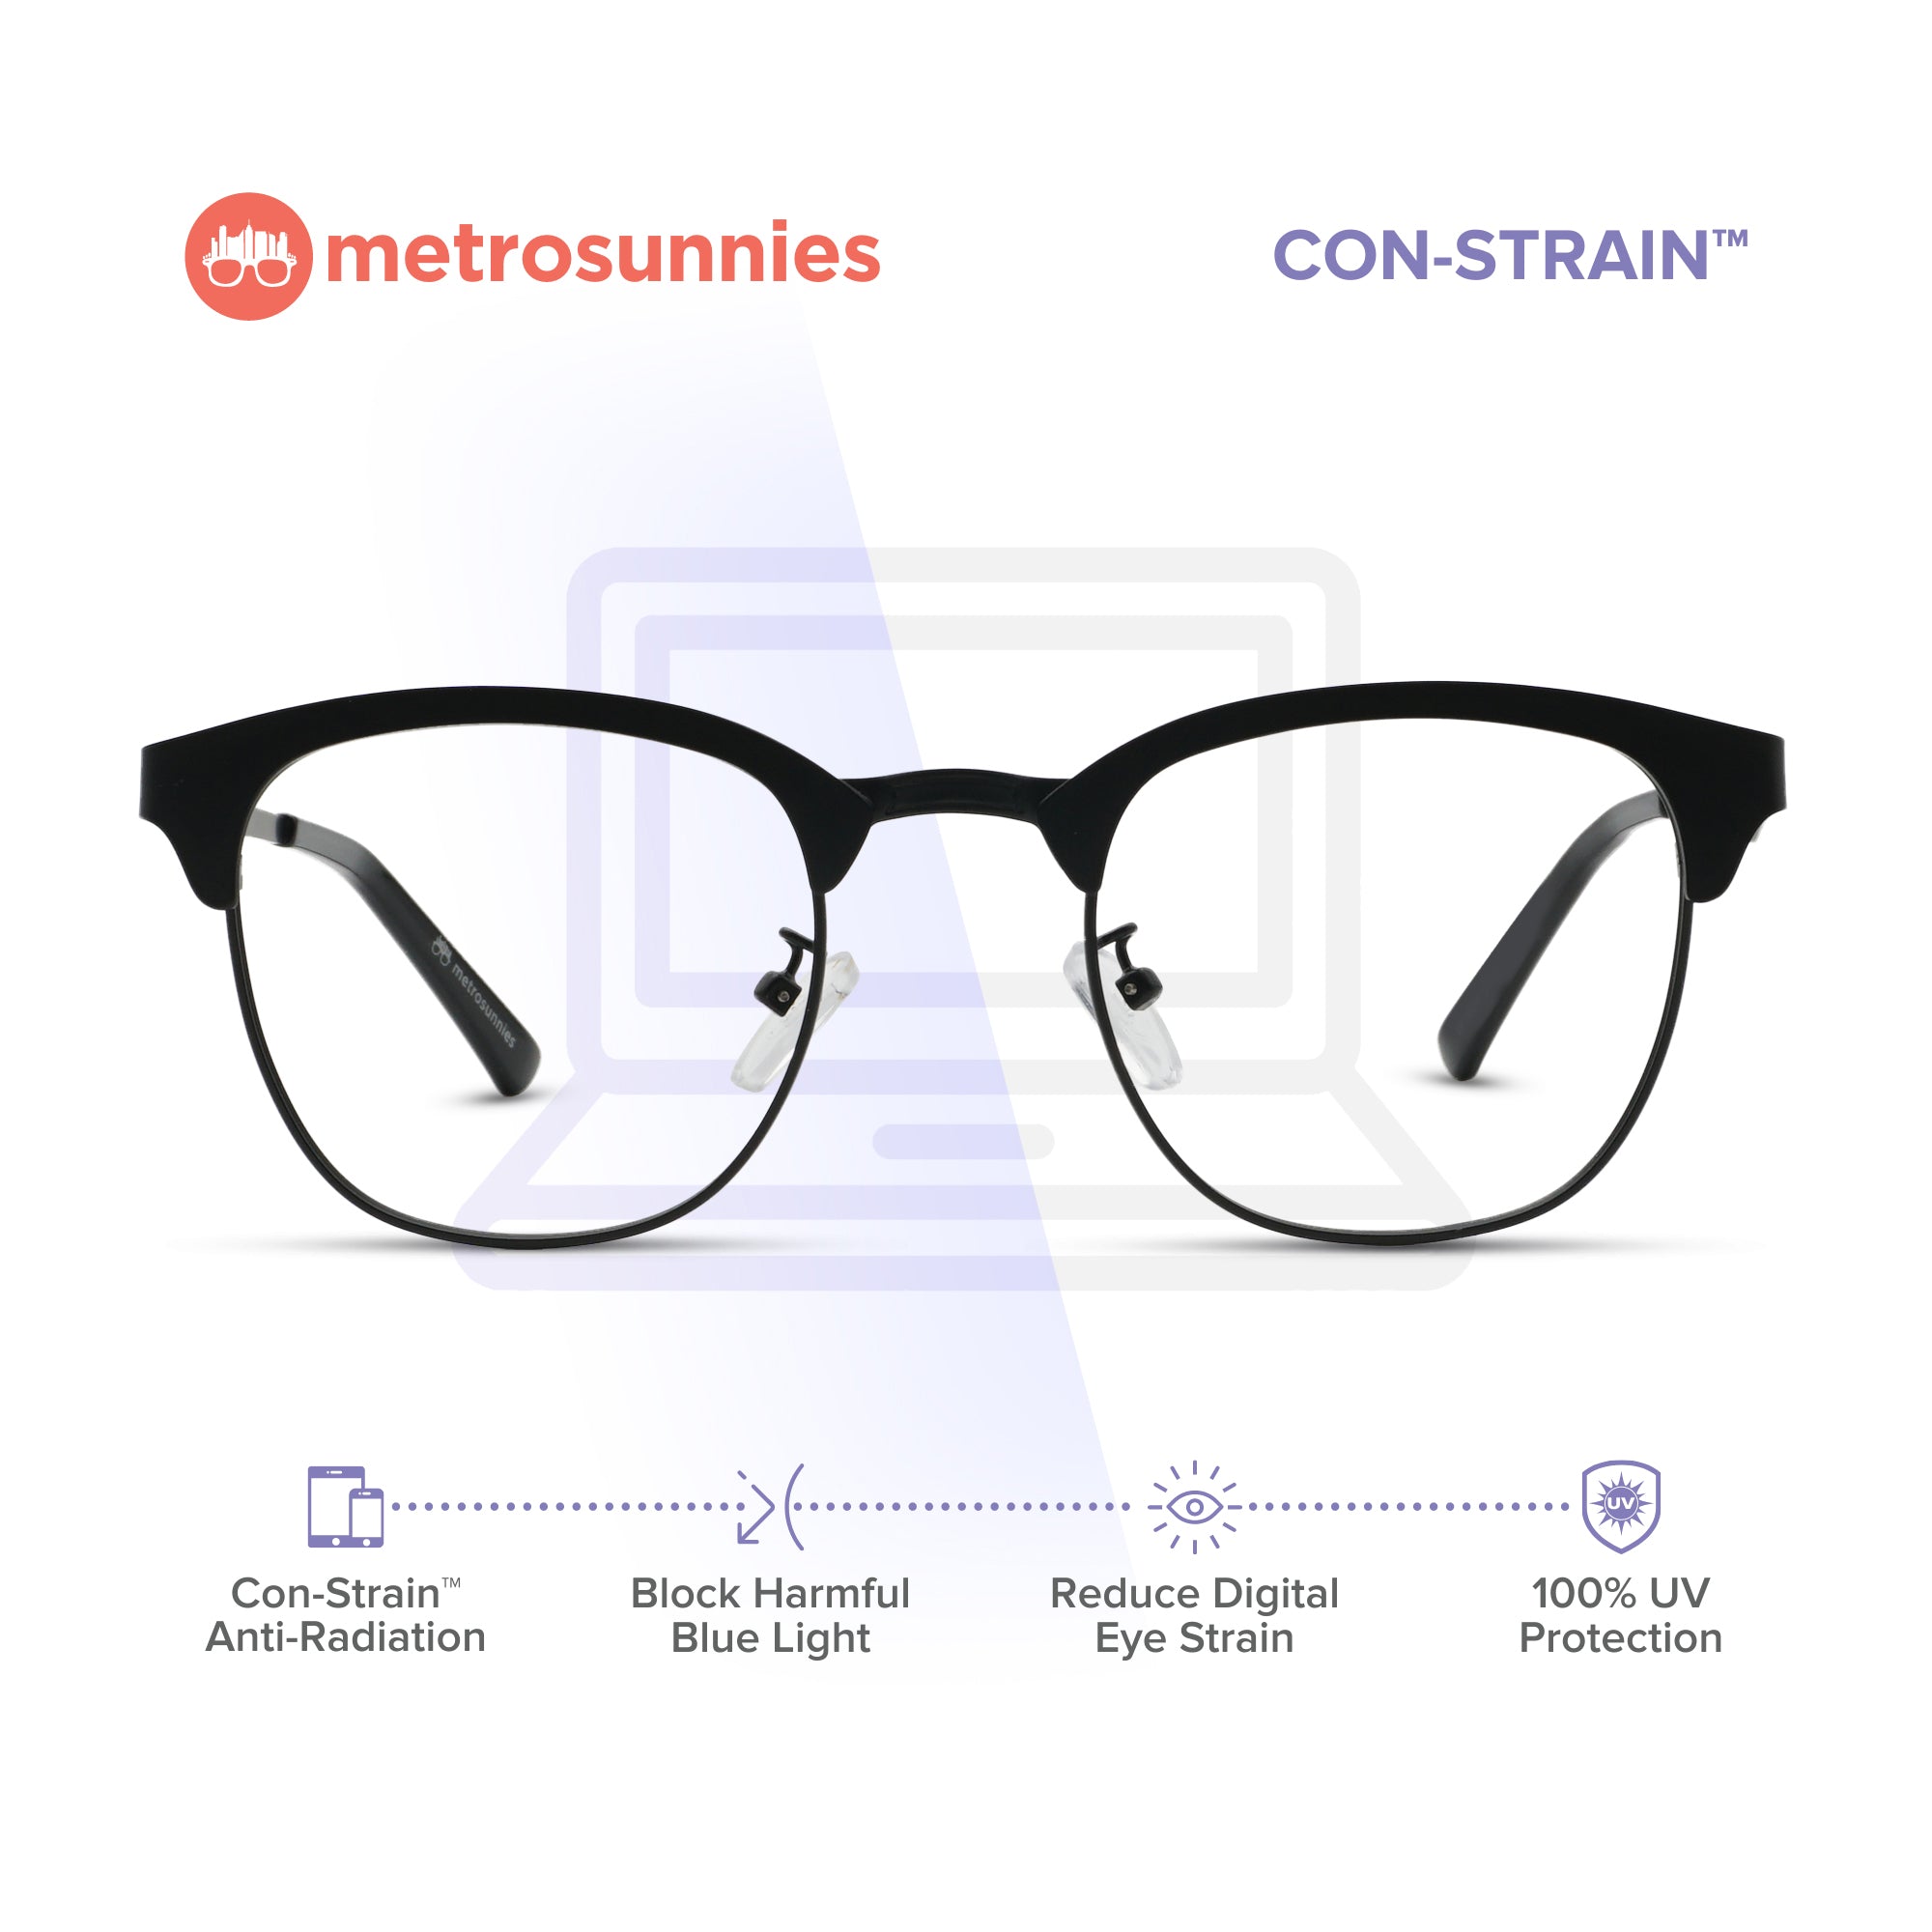 MetroSunnies King Specs (Black) / Con-Strain Blue Light / Anti-Radiation Computer Eyeglasses